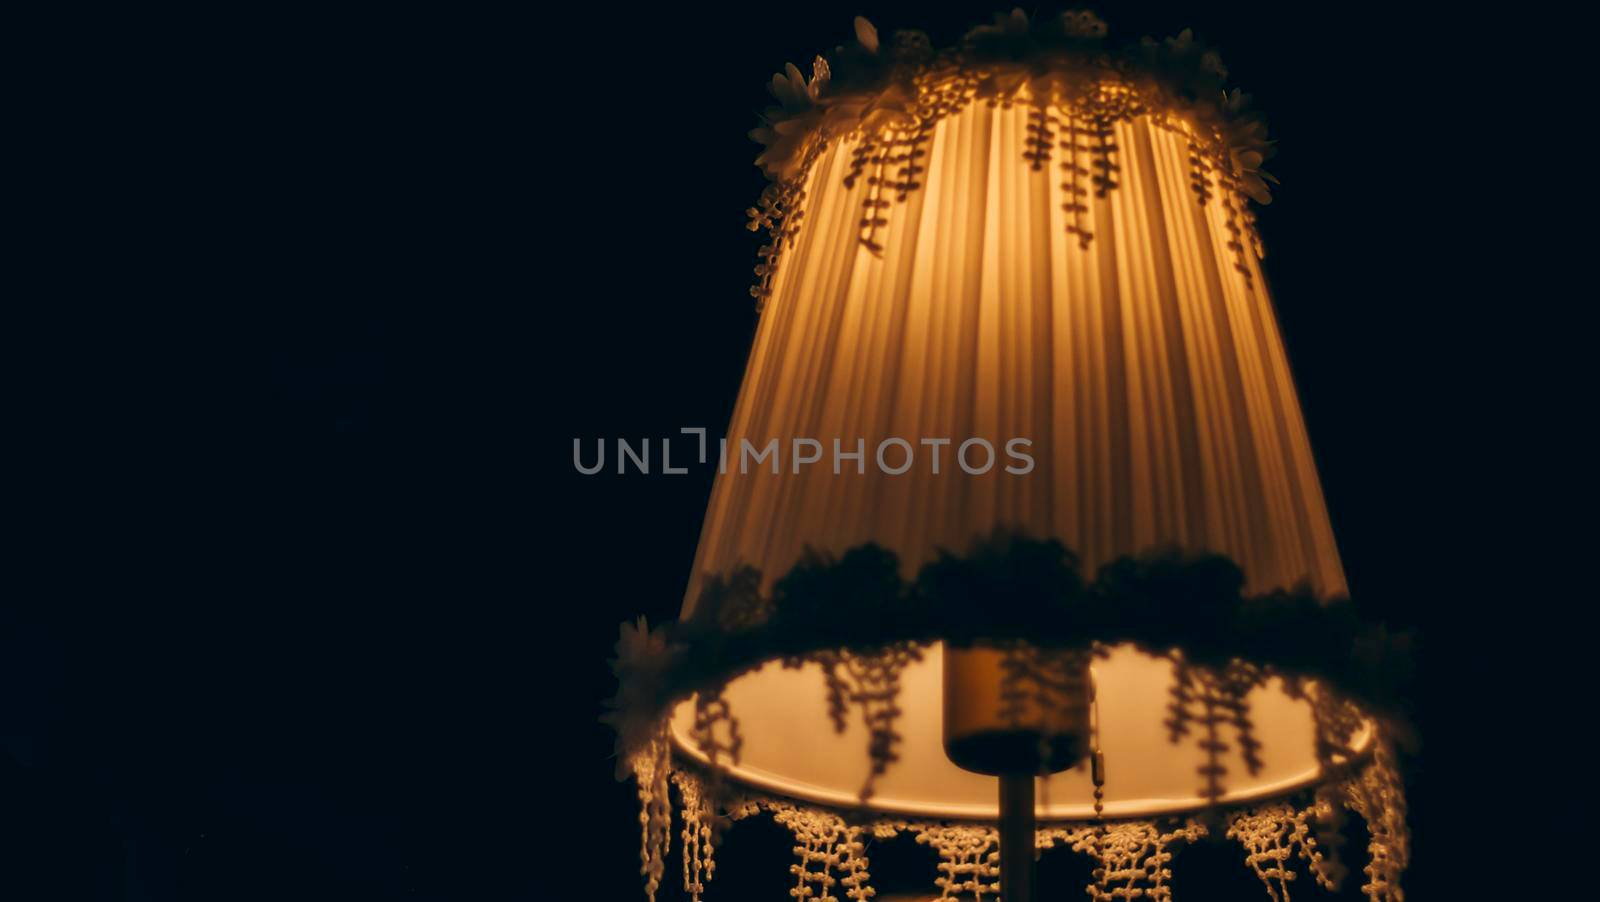 Vintage table lamp illuminated, Elegant Chandelier illuminated interior decoration in five star hotel or luxury house